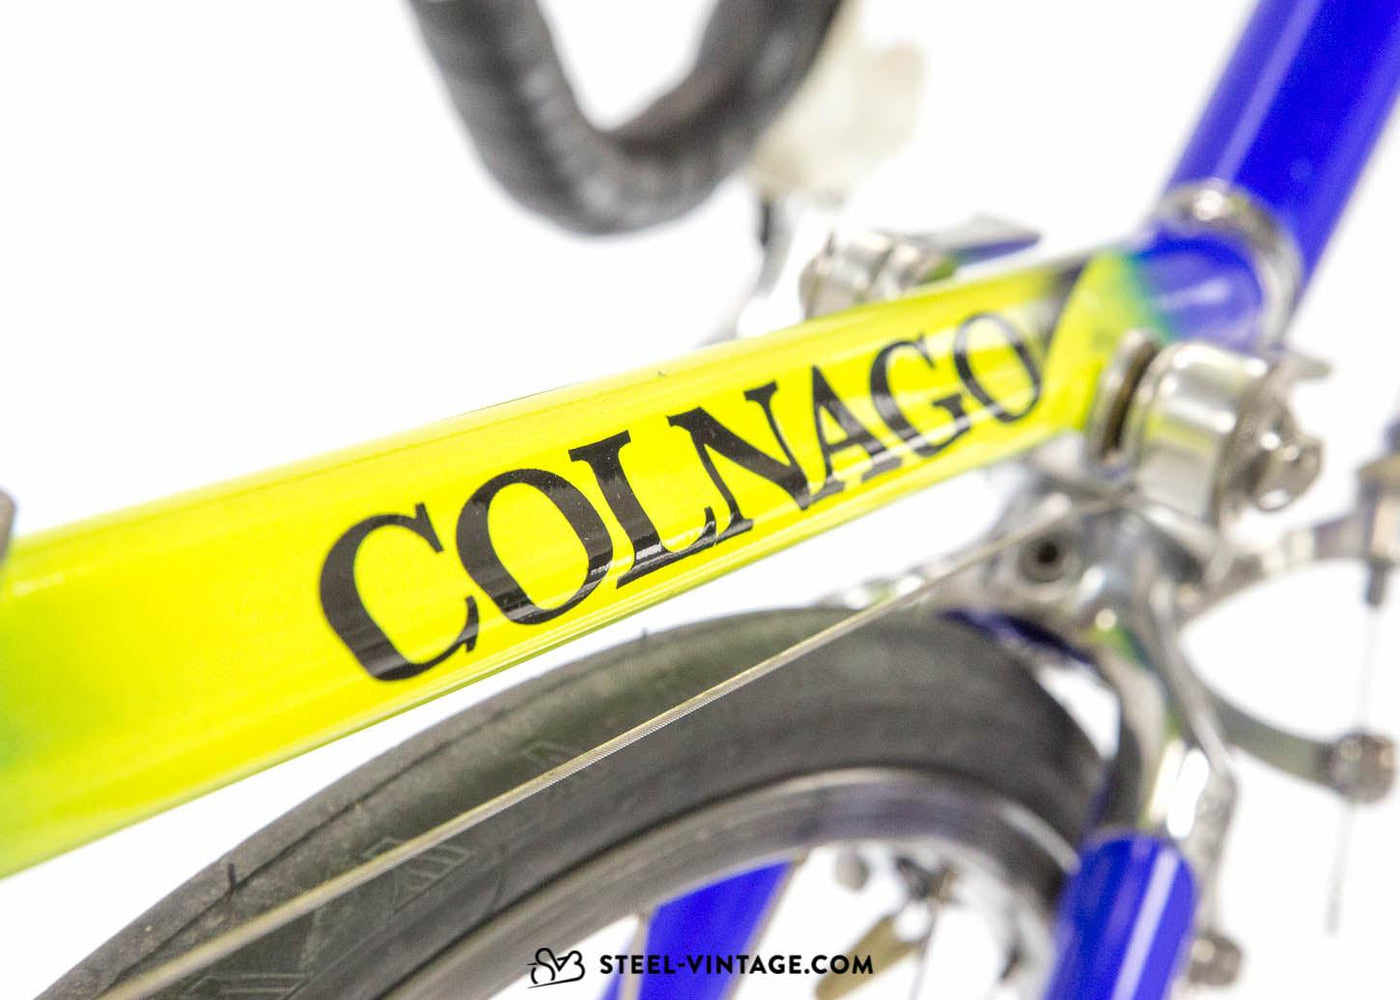 Colnago Master Classic Road Bike 1988 - Steel Vintage Bikes